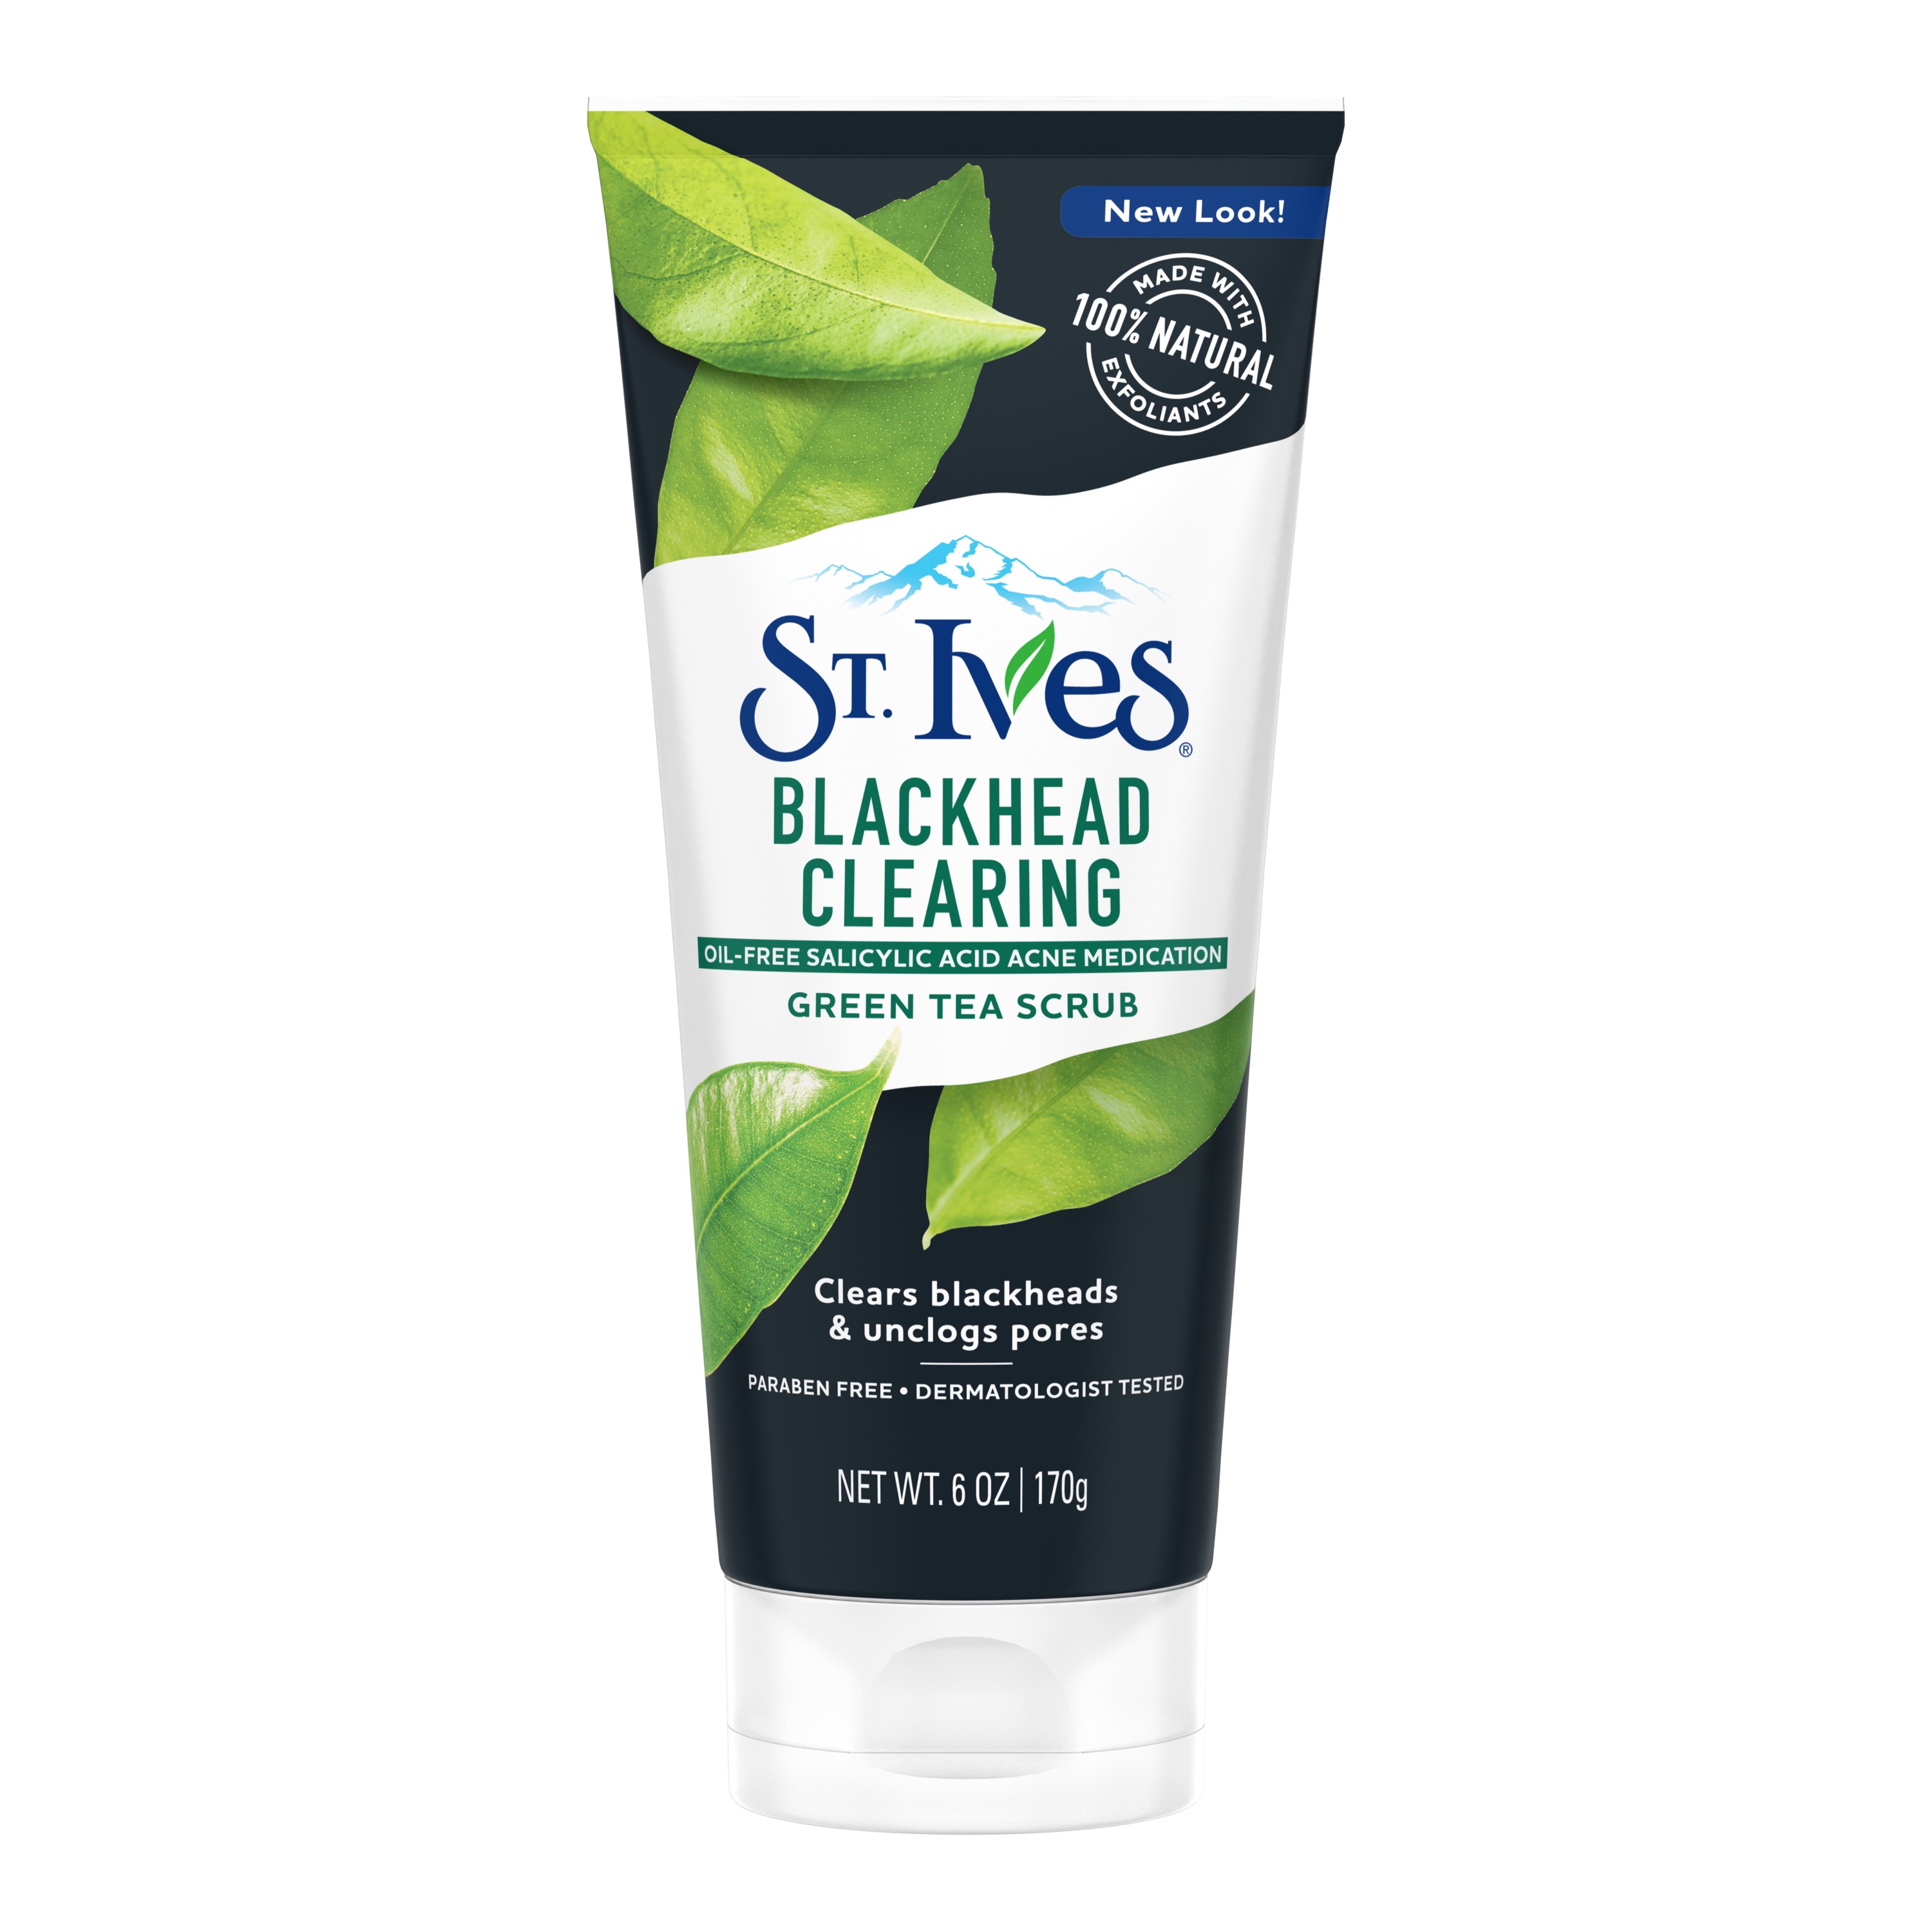 St. Ives Blackhead Clearing Face Scrub Green Tea Image